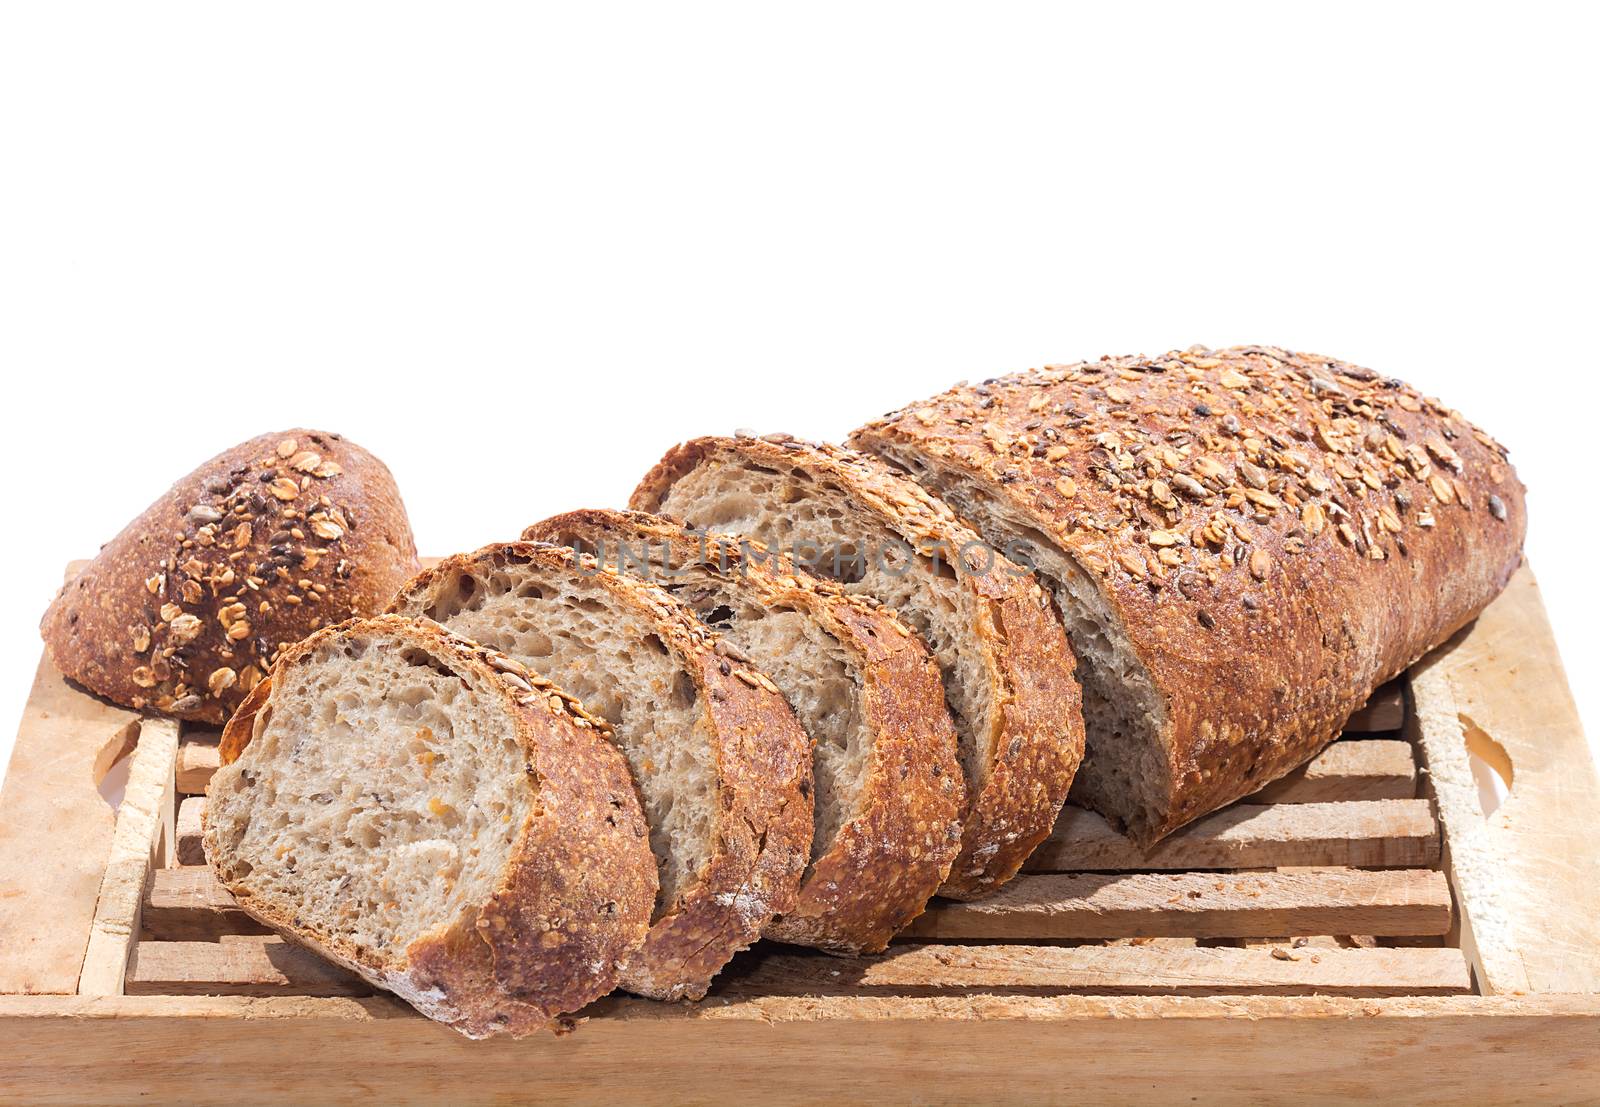 Sliced Whole Grain Bread by milinz